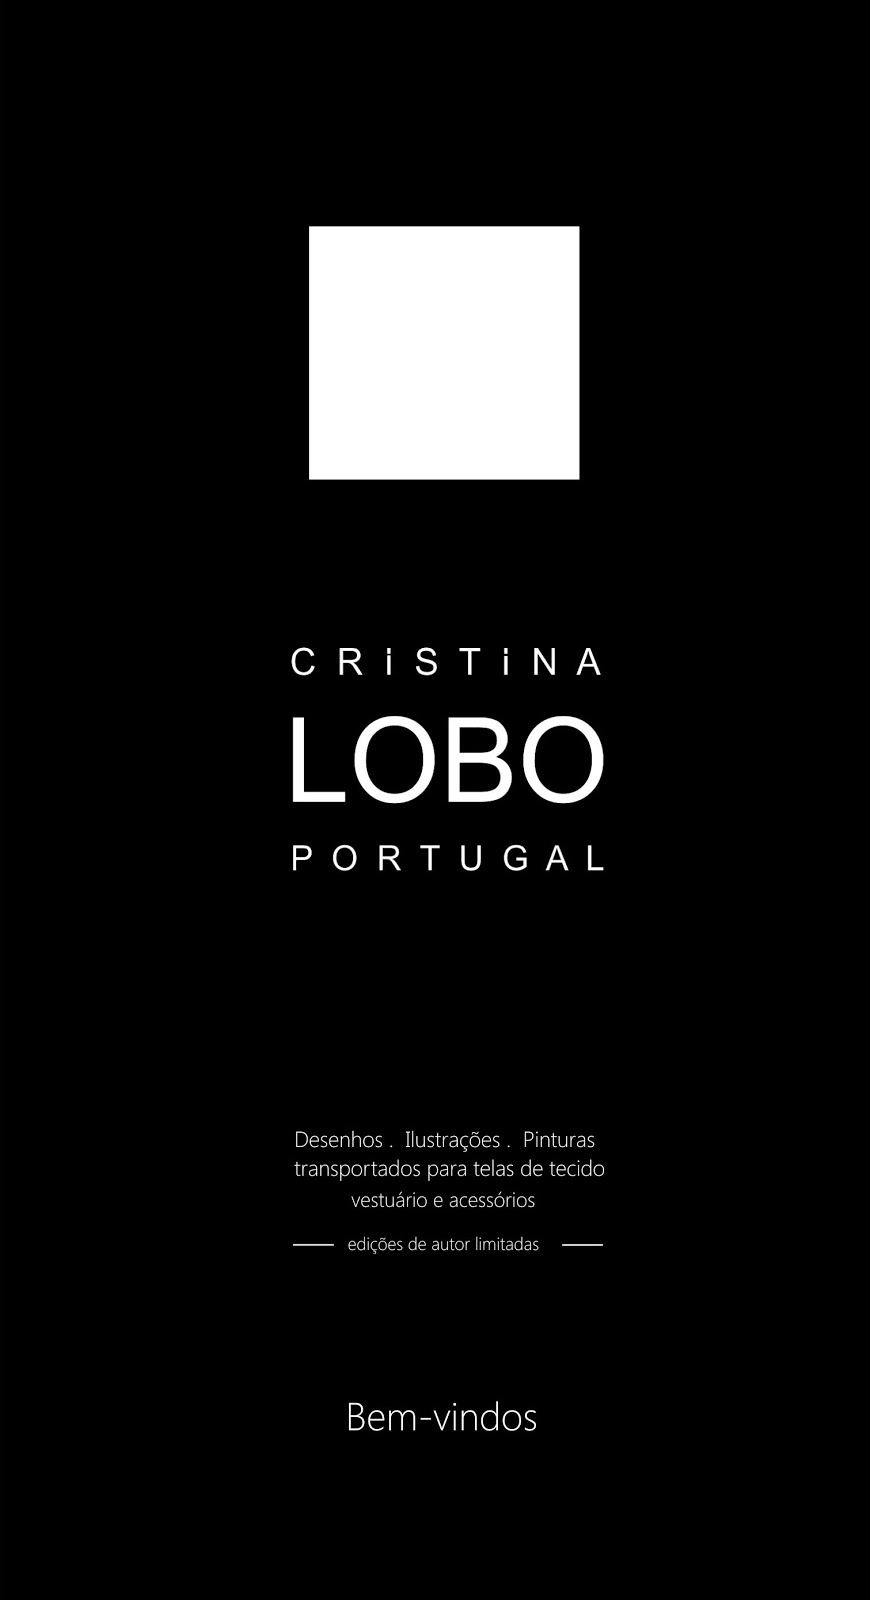 Cristina Lobo Portugal